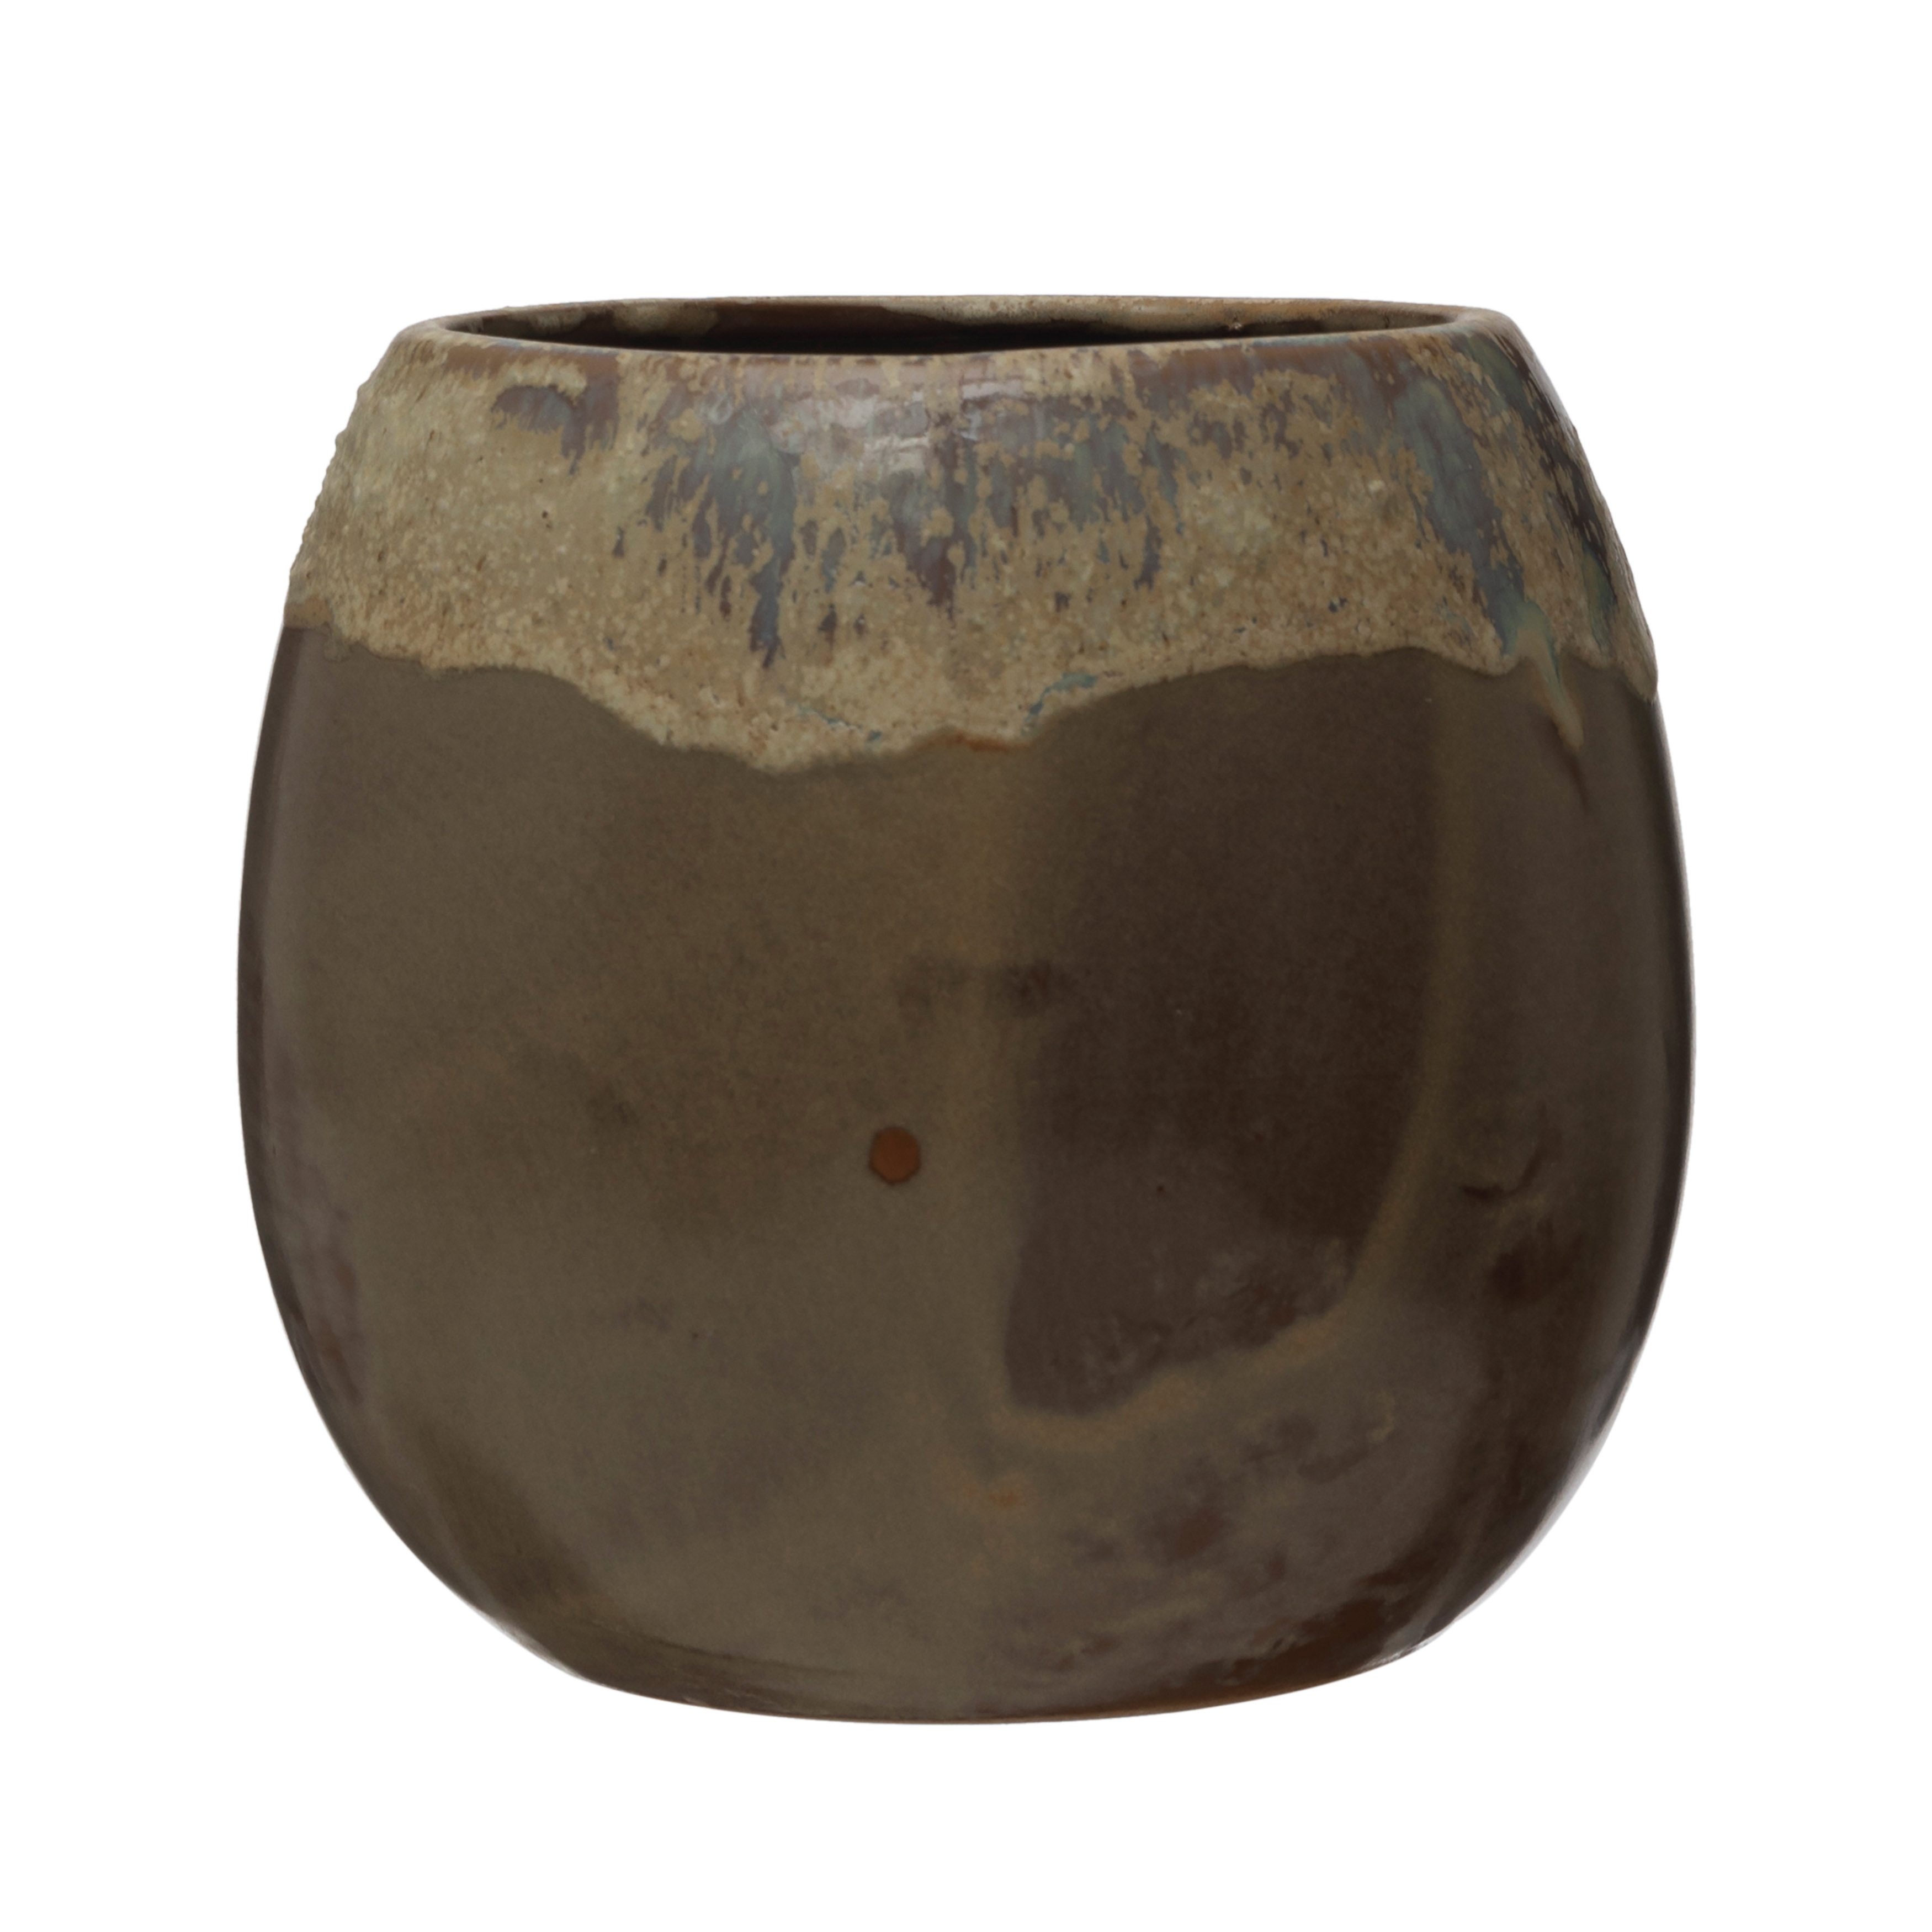  Stoneware Planter, Brown and Caramel Reactive Glaze - Image 0